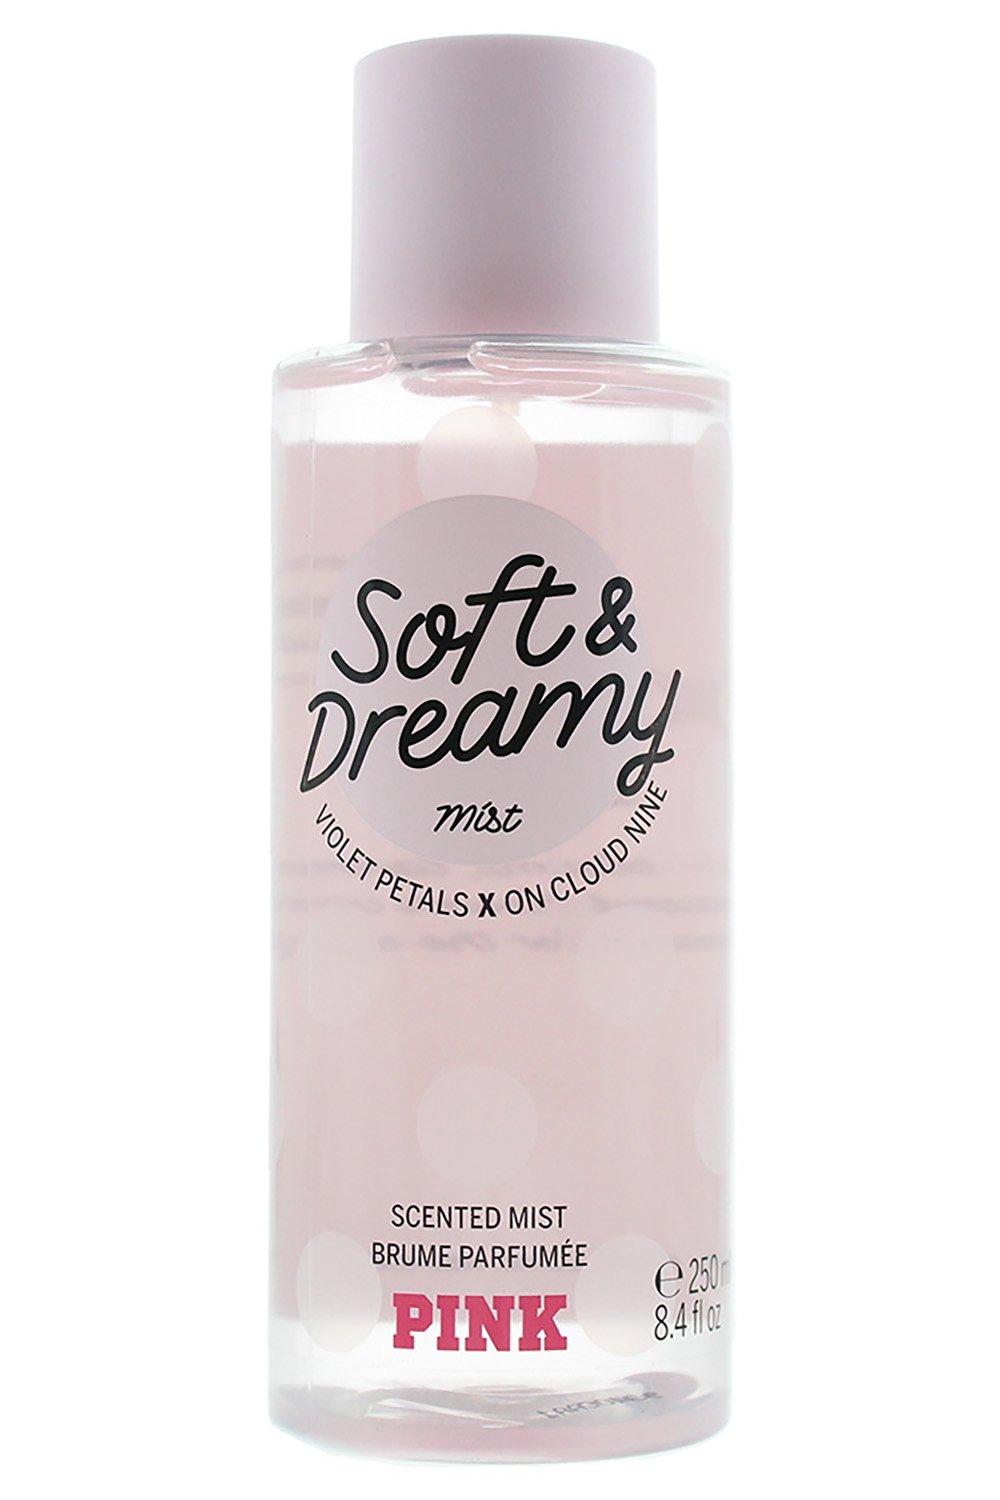 victorias secret pink soft and dreamy violet petals scented mist - size: 250ml